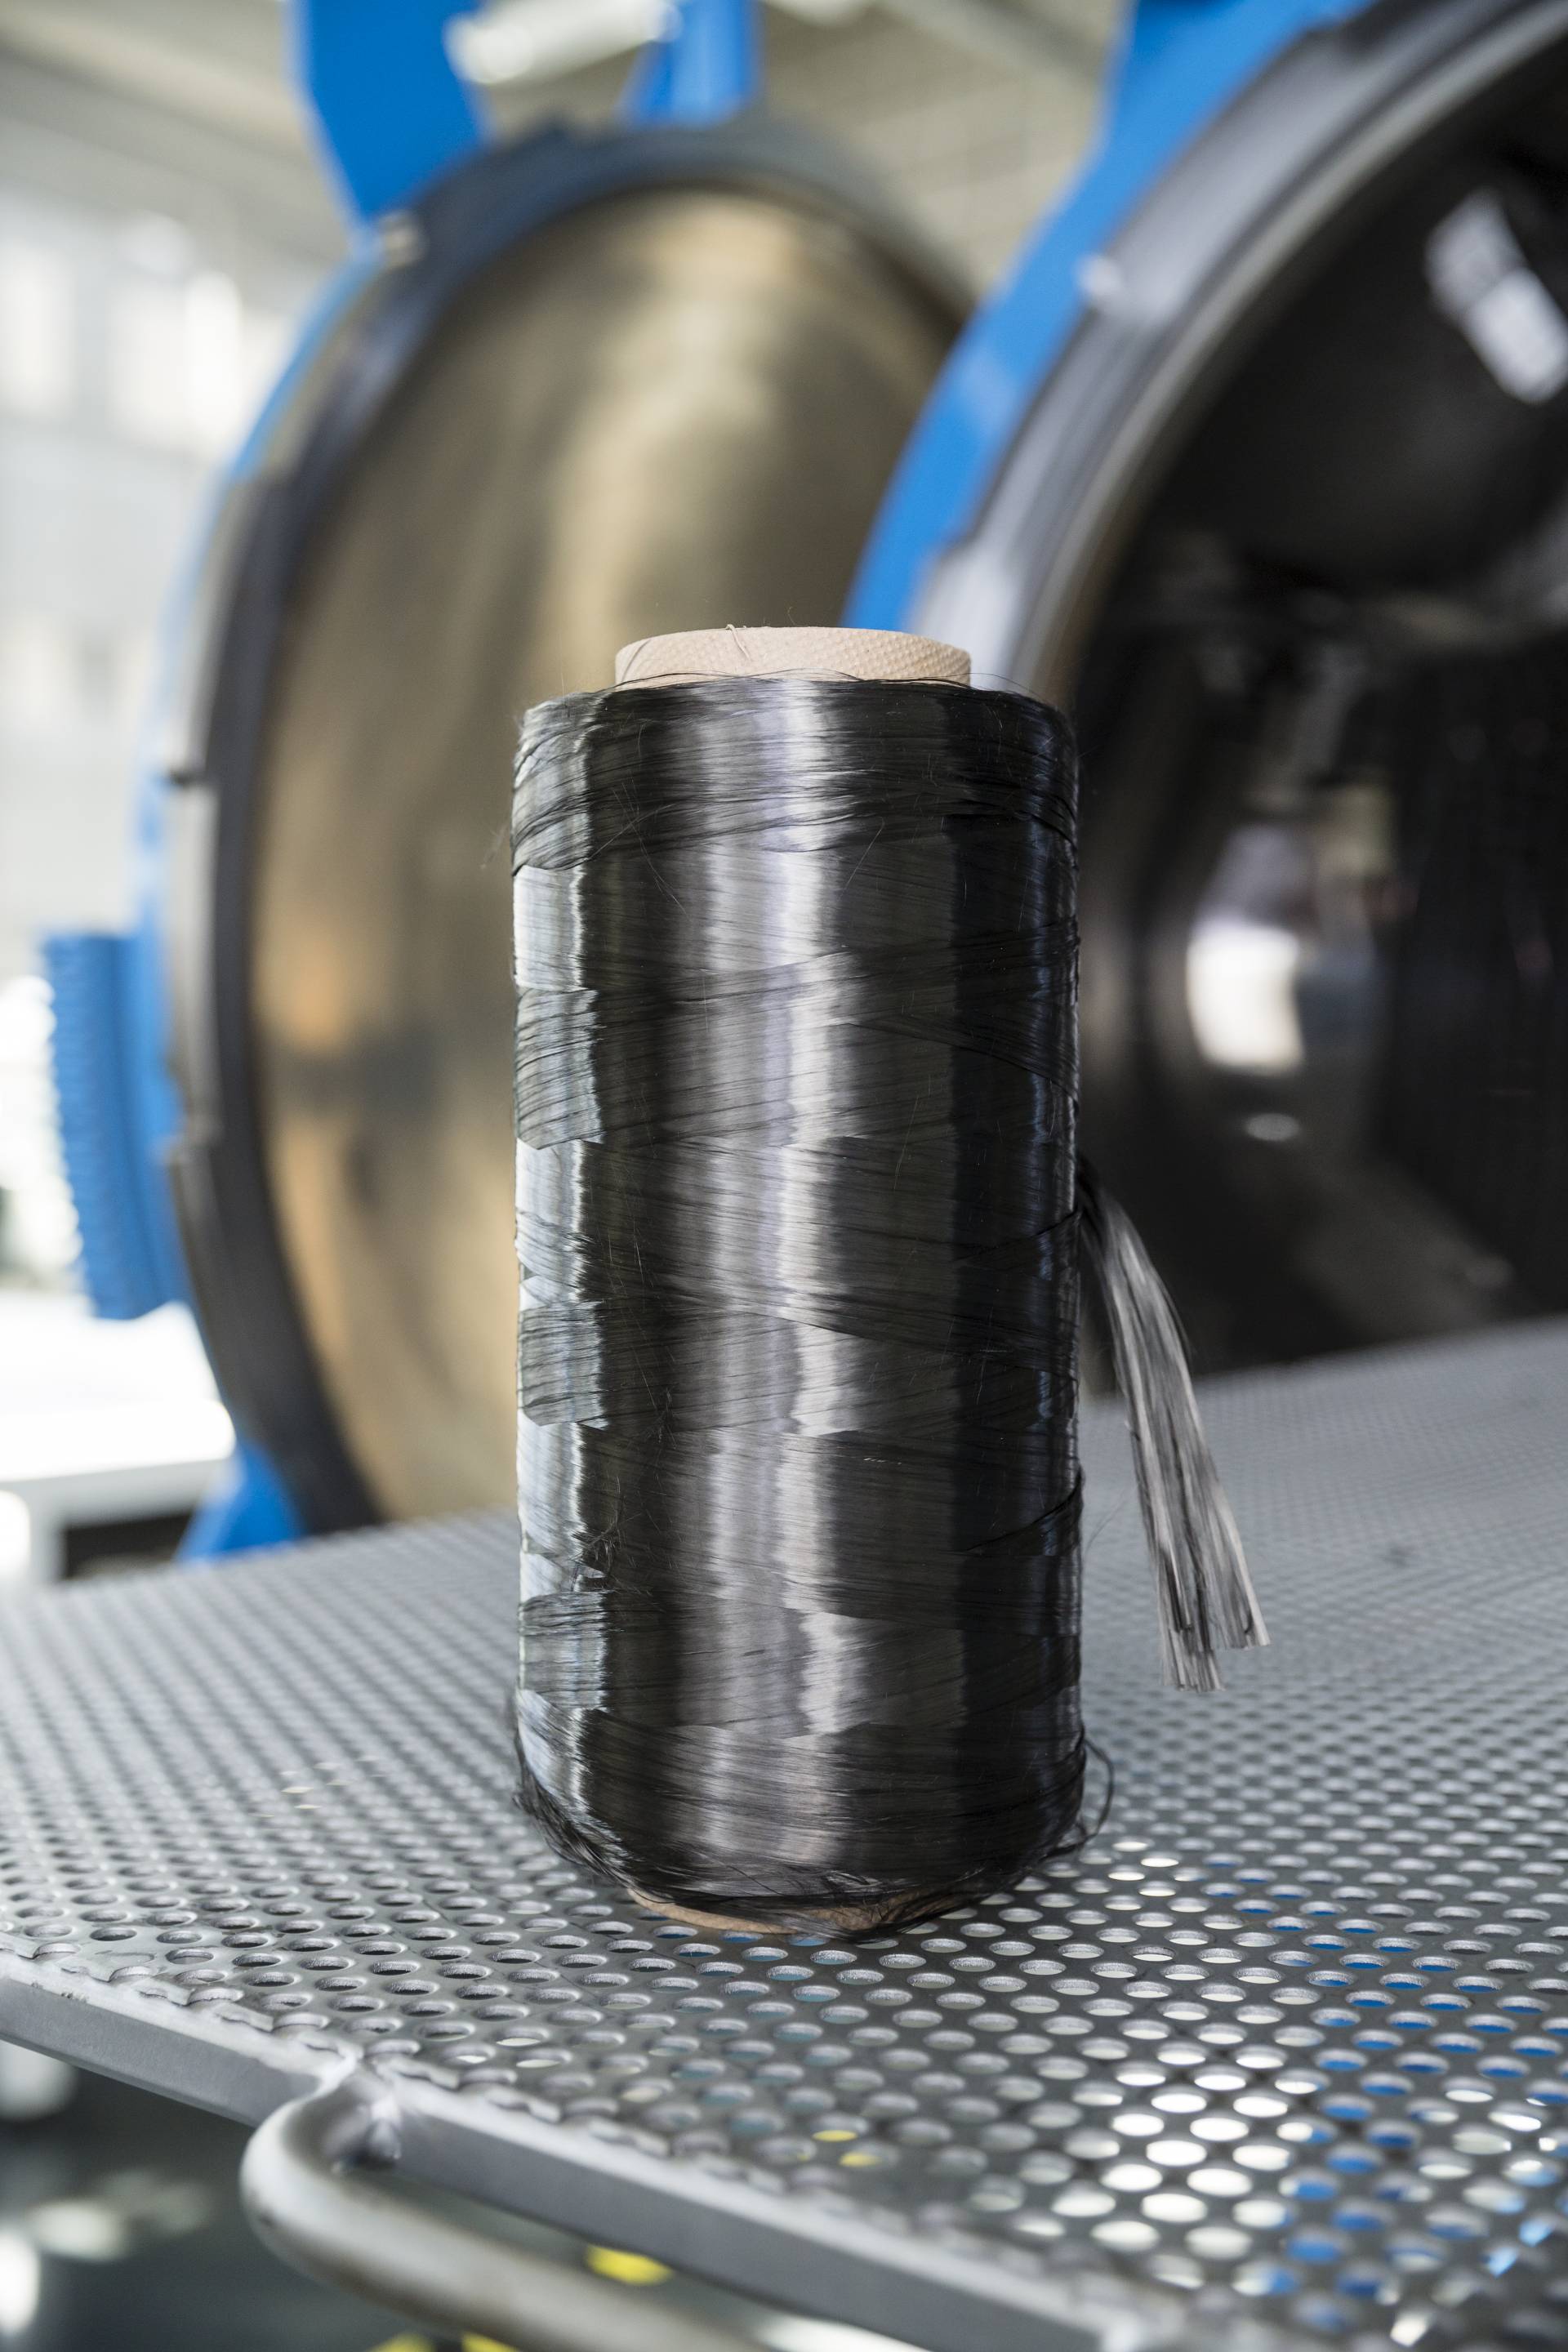 Carbon fiber reinforced plastic (CFRP) offers the highest lightweight construction potential